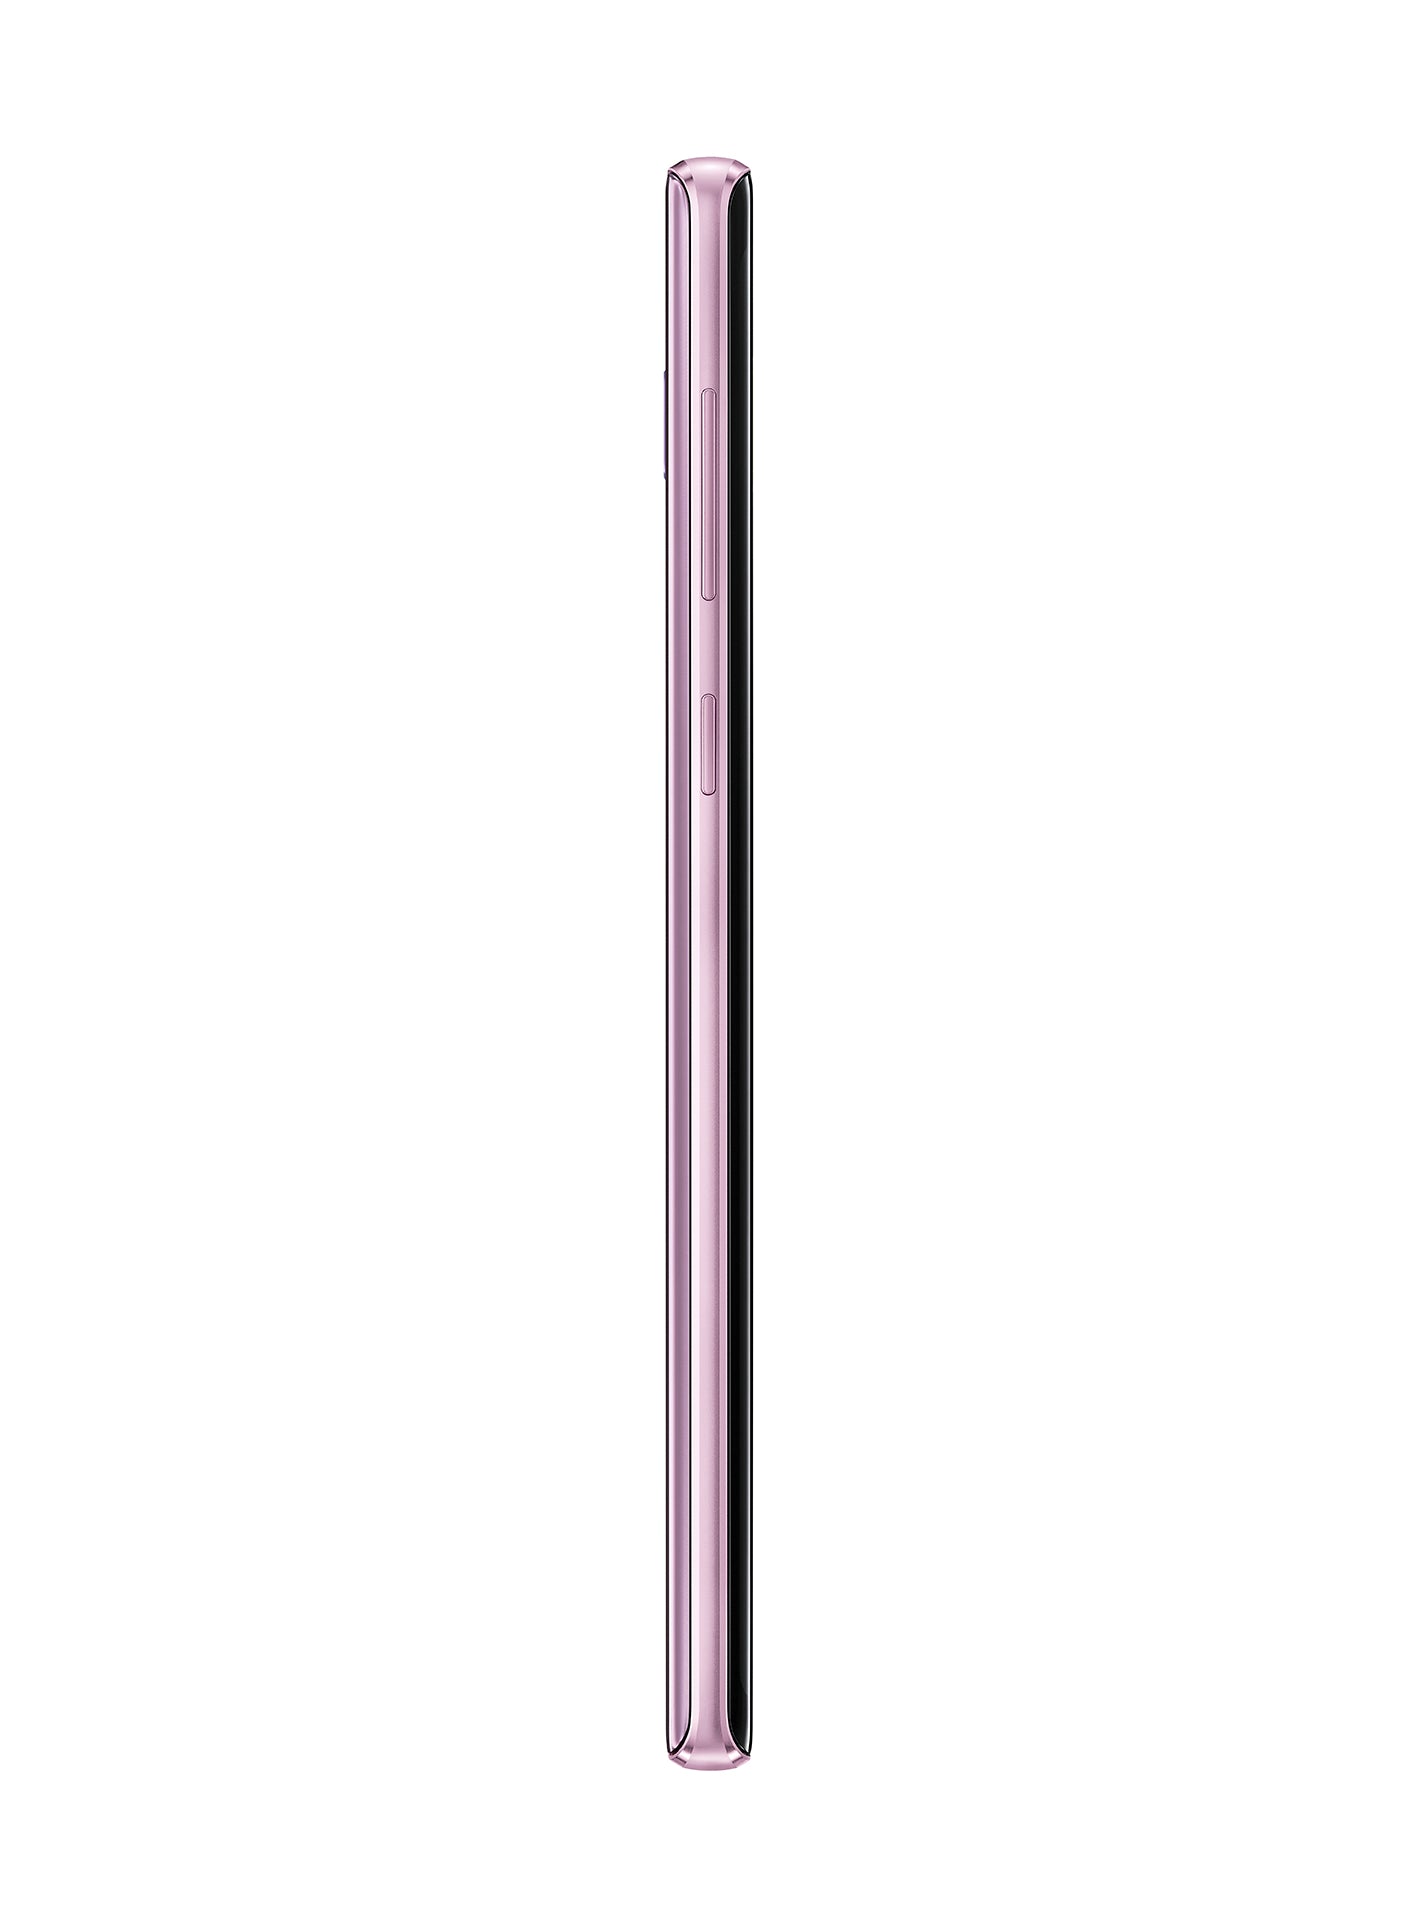 Galaxy Note 9 (128 GB, Lavender Purple) Condition: FAIR - 0